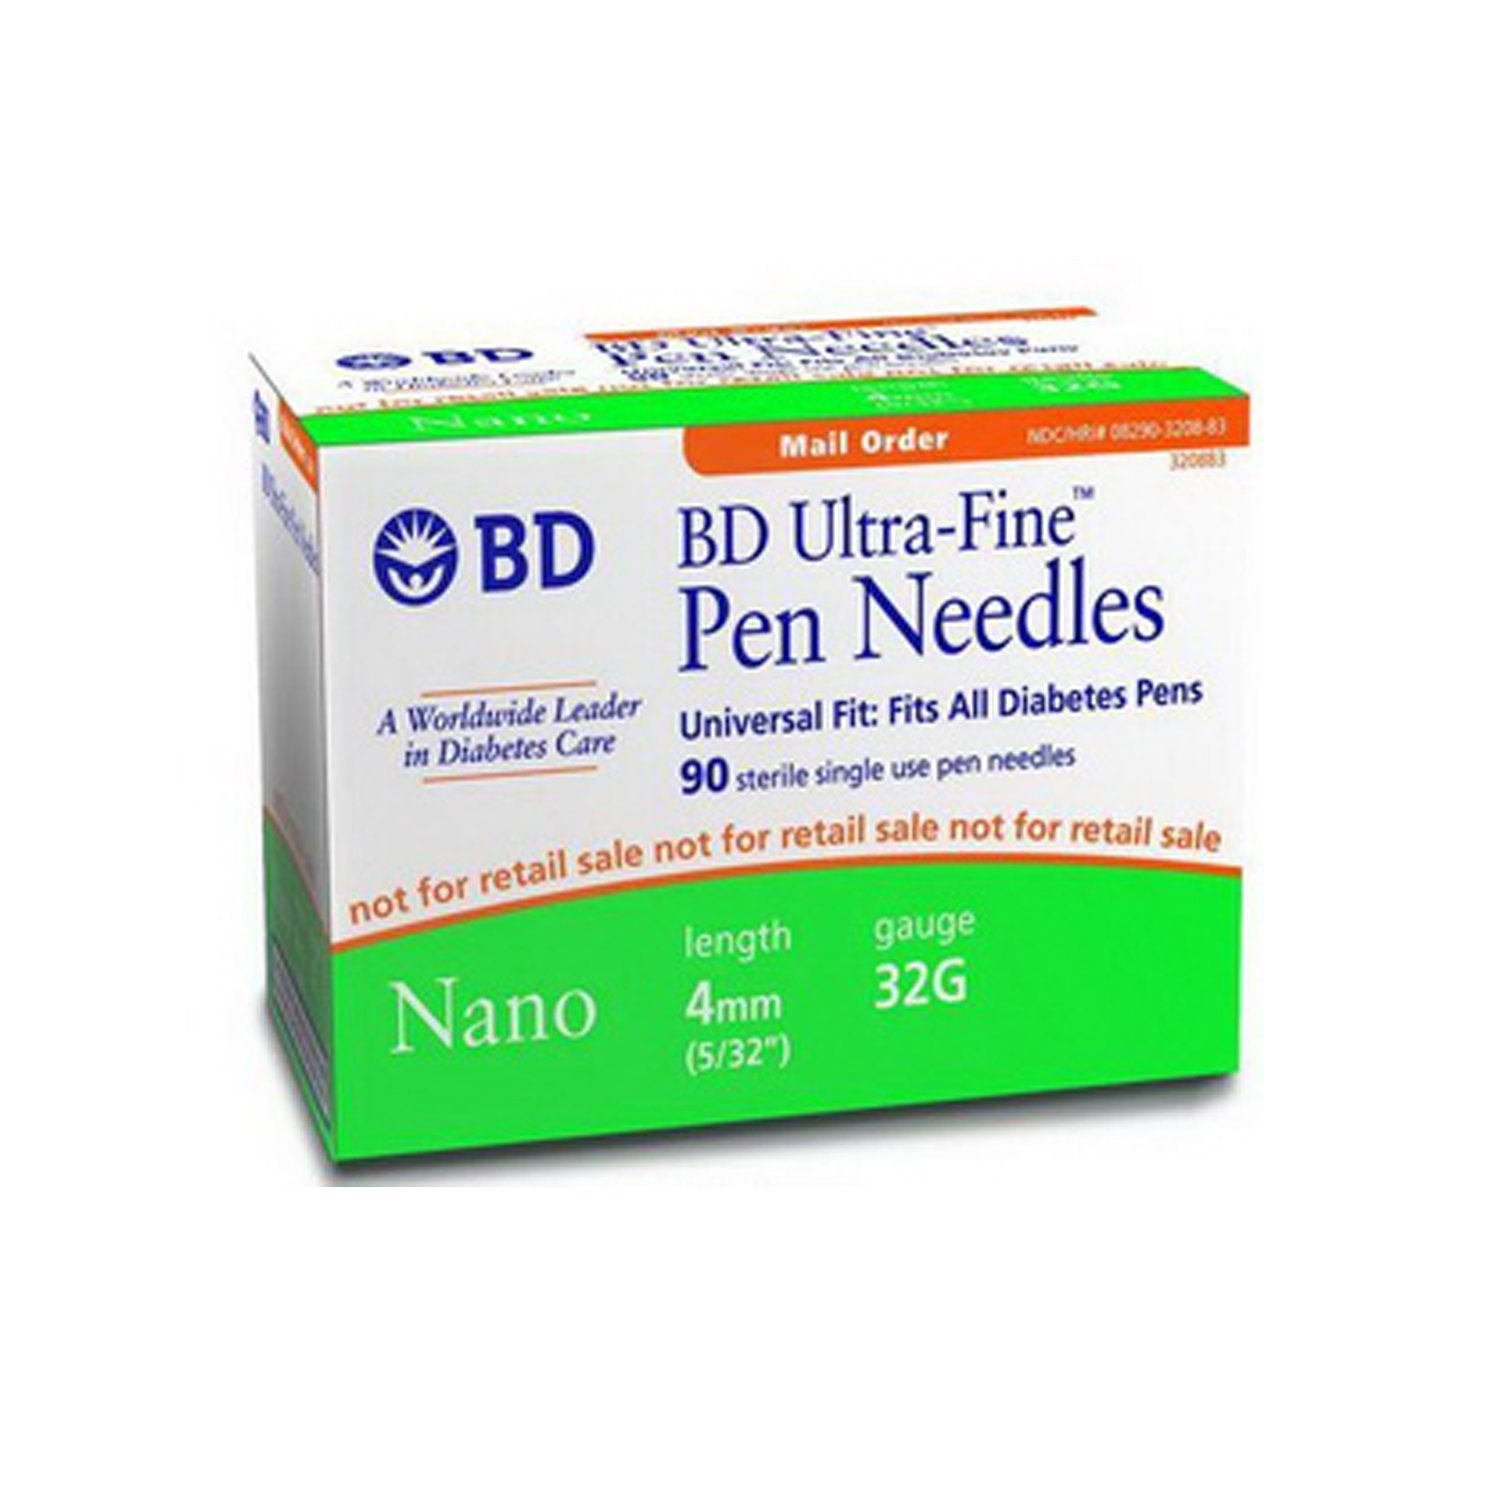 BD Nano Ultra-Fine Nano Pen Needles 4mm x 32 Gauge, 100/box — Mountainside  Medical Equipment